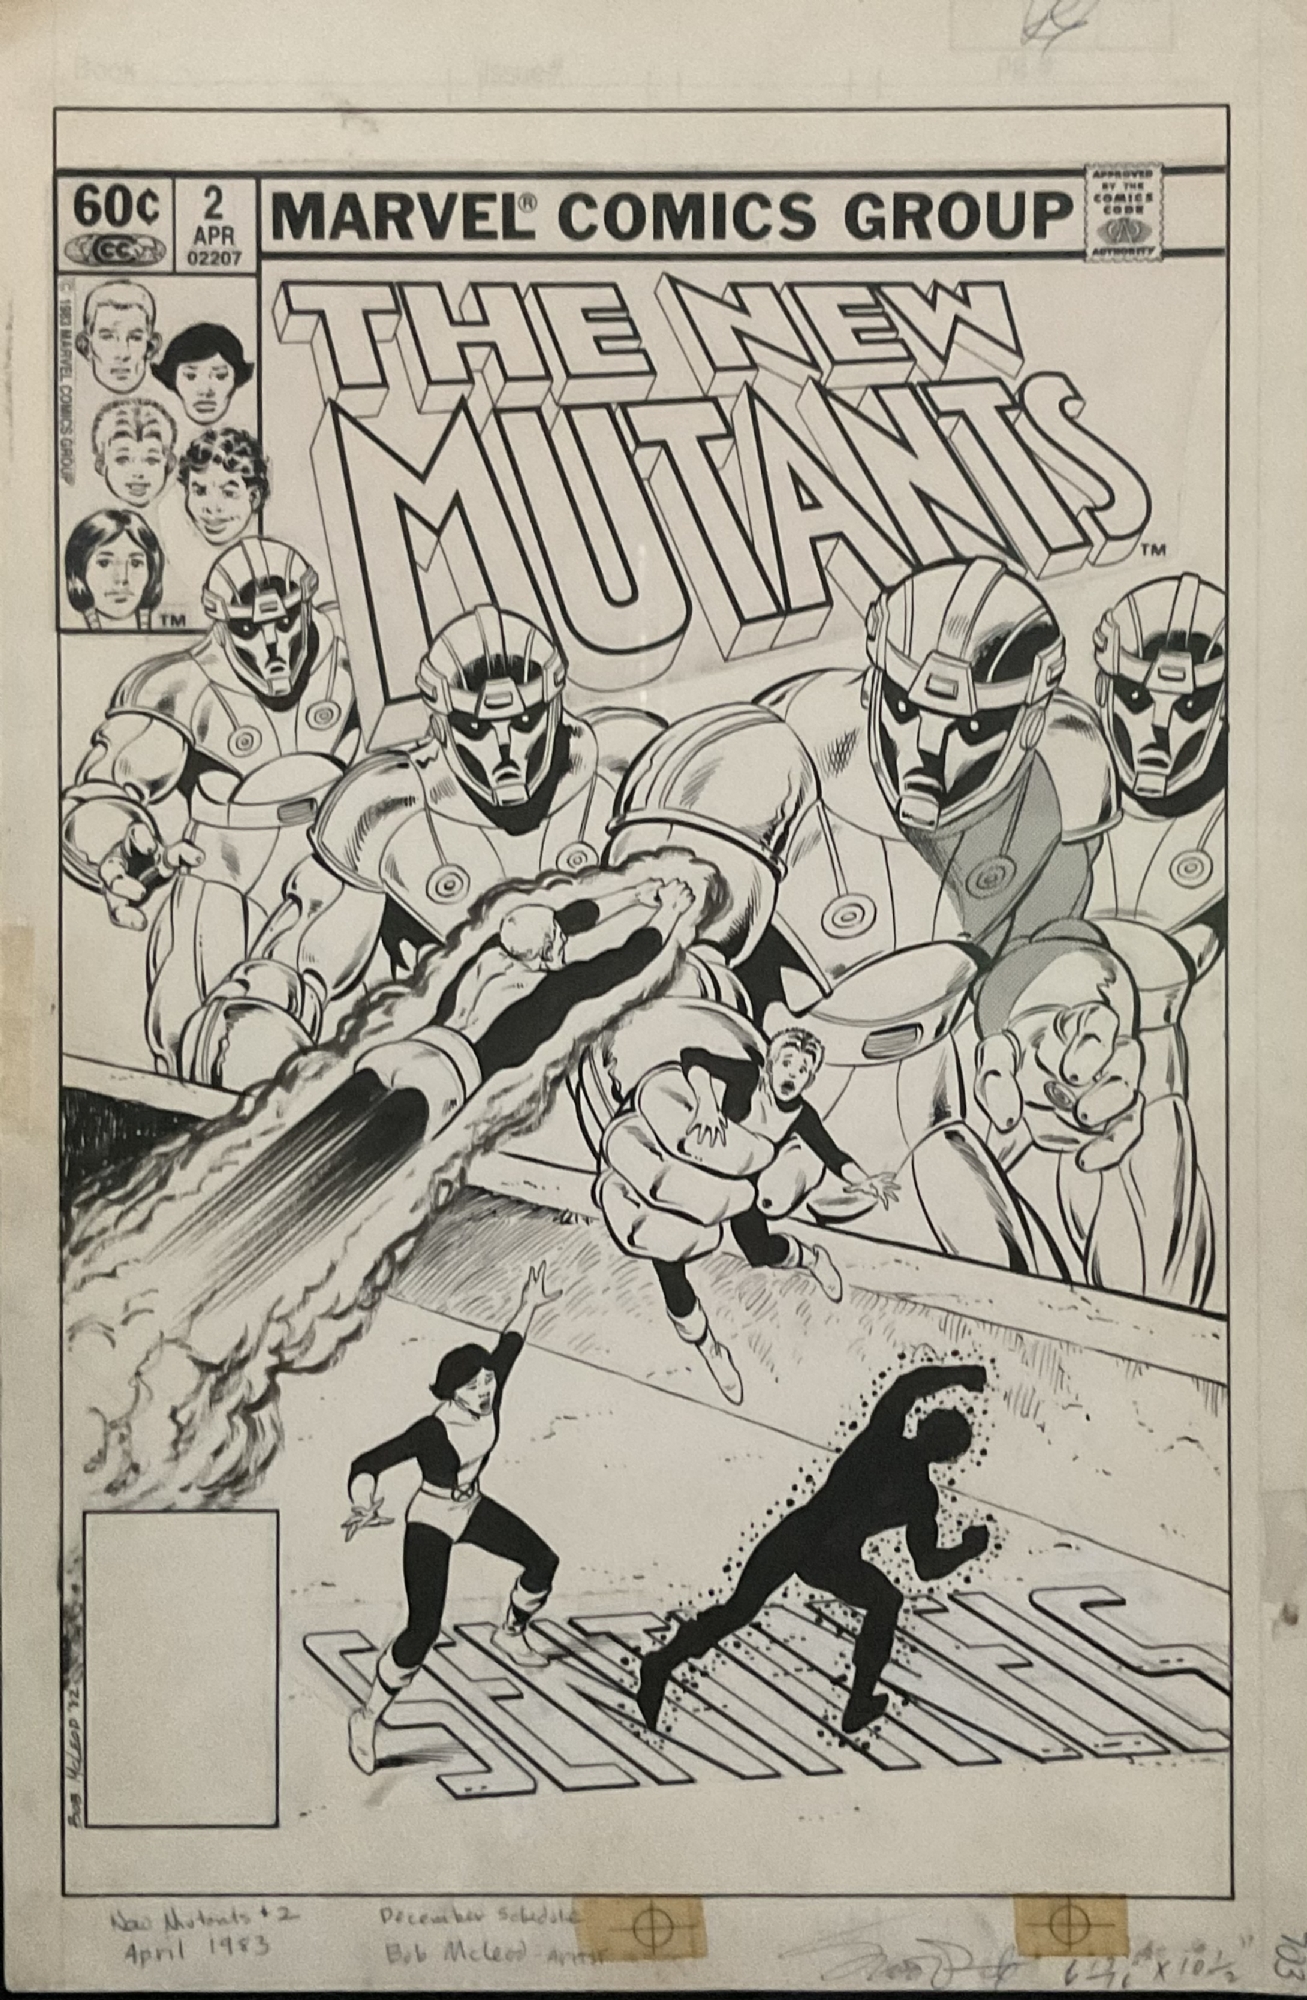 New Mutants #2, in Steve Lawrence's Published Art Comic Art Gallery Room